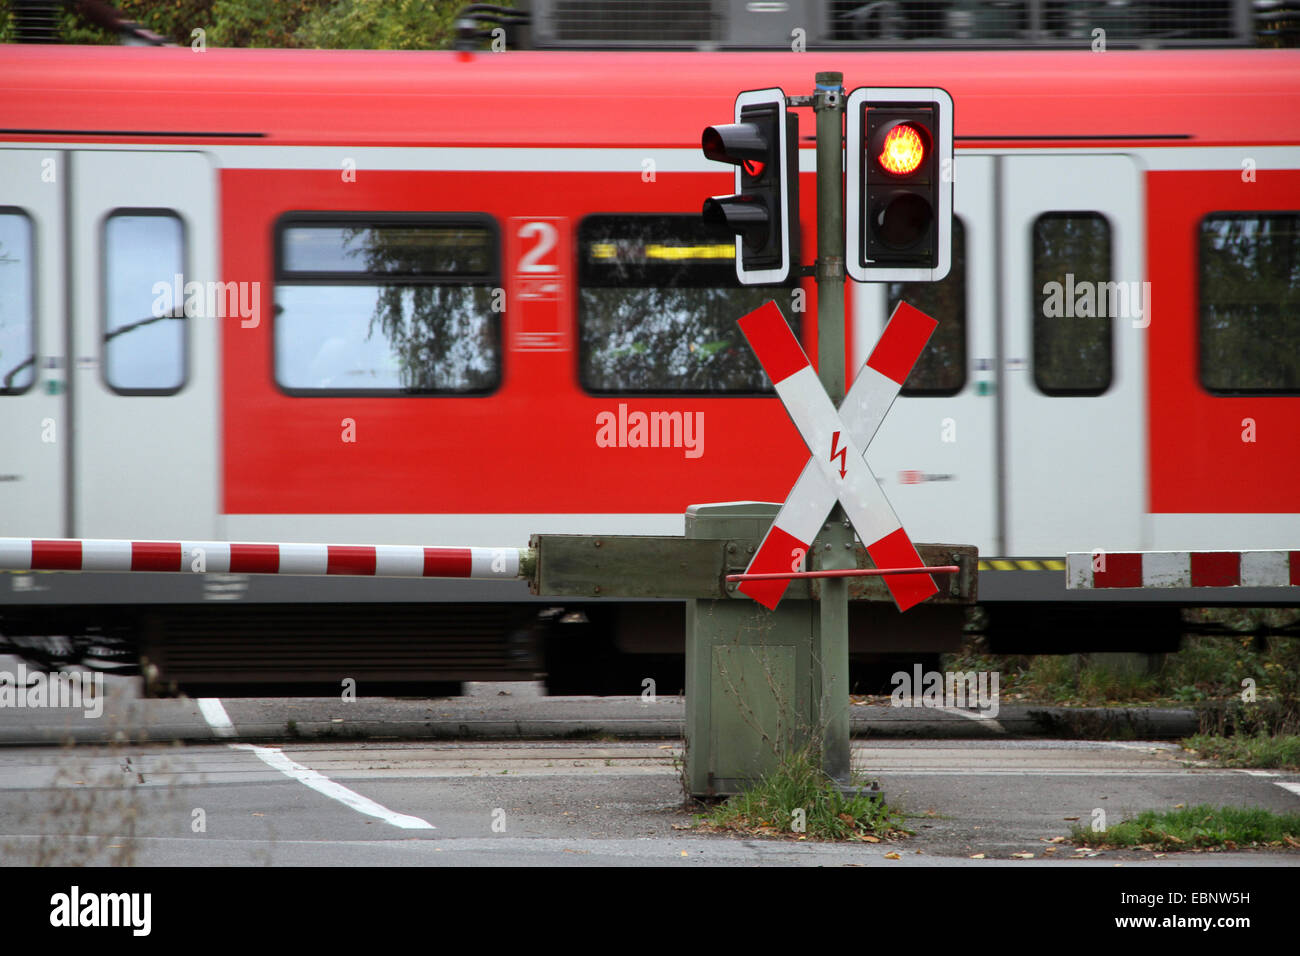 urban train crossing, Germany Stock Photo